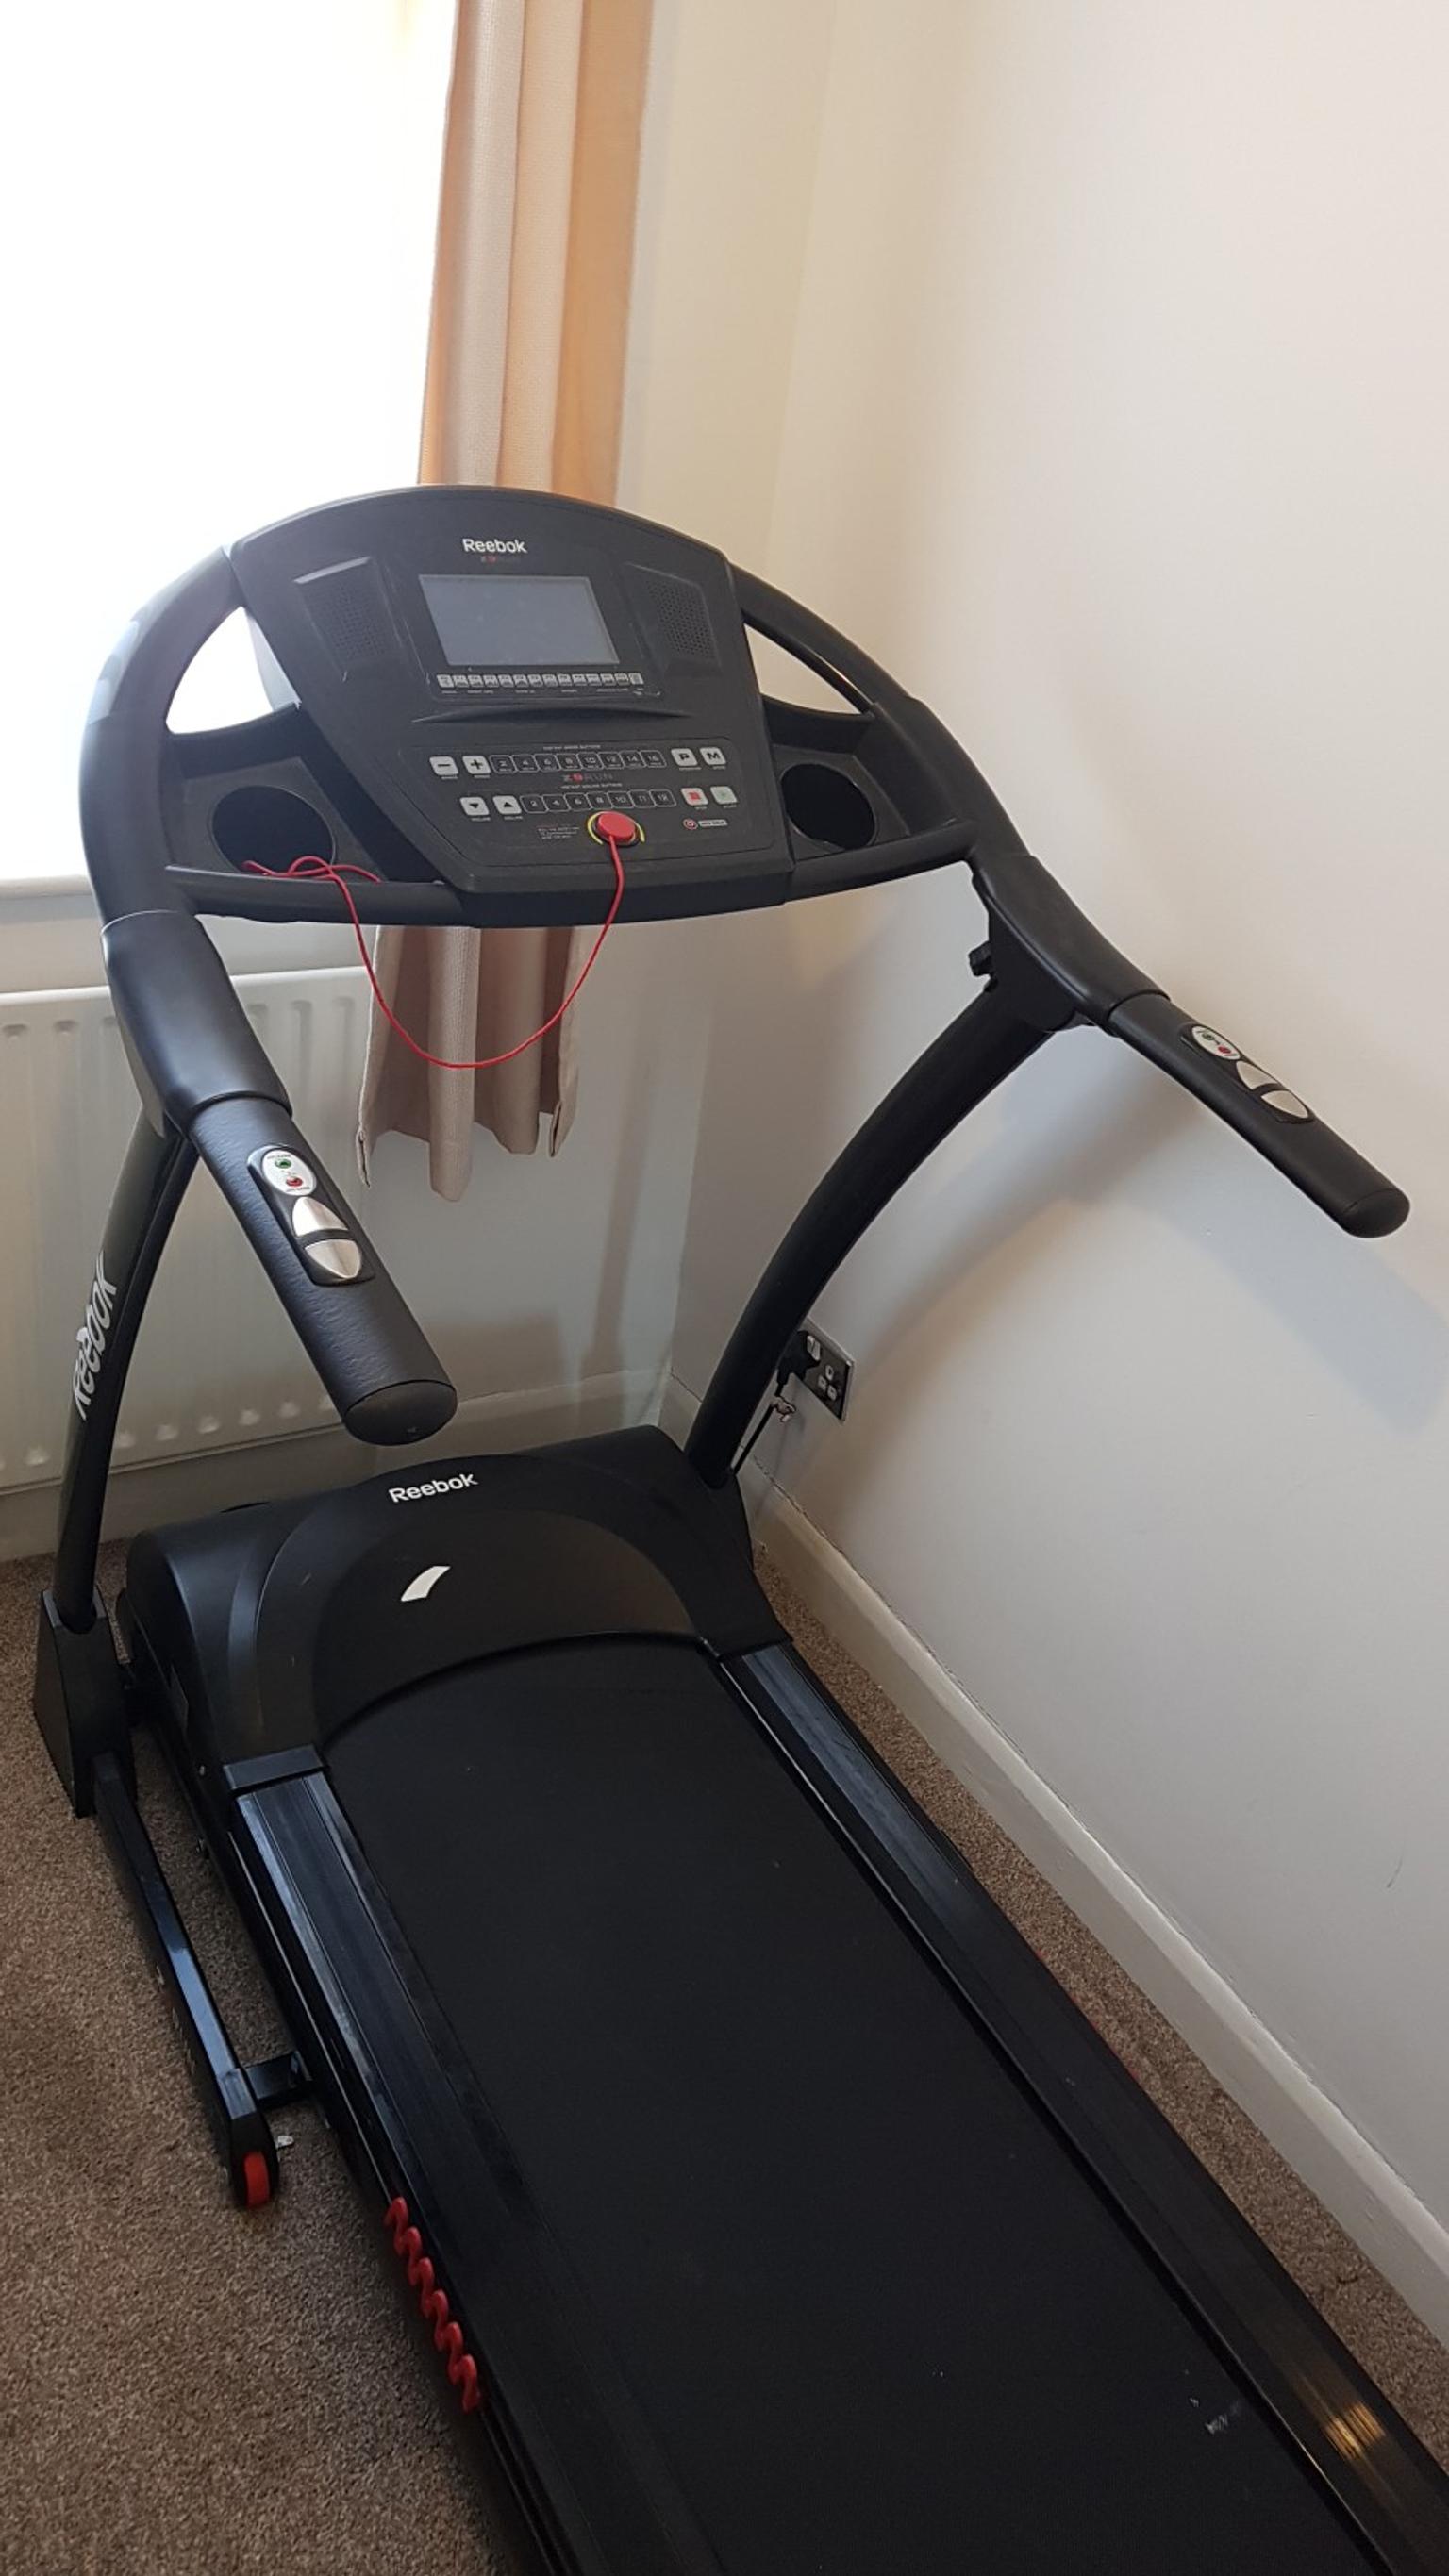 reebok z9 run treadmill manual